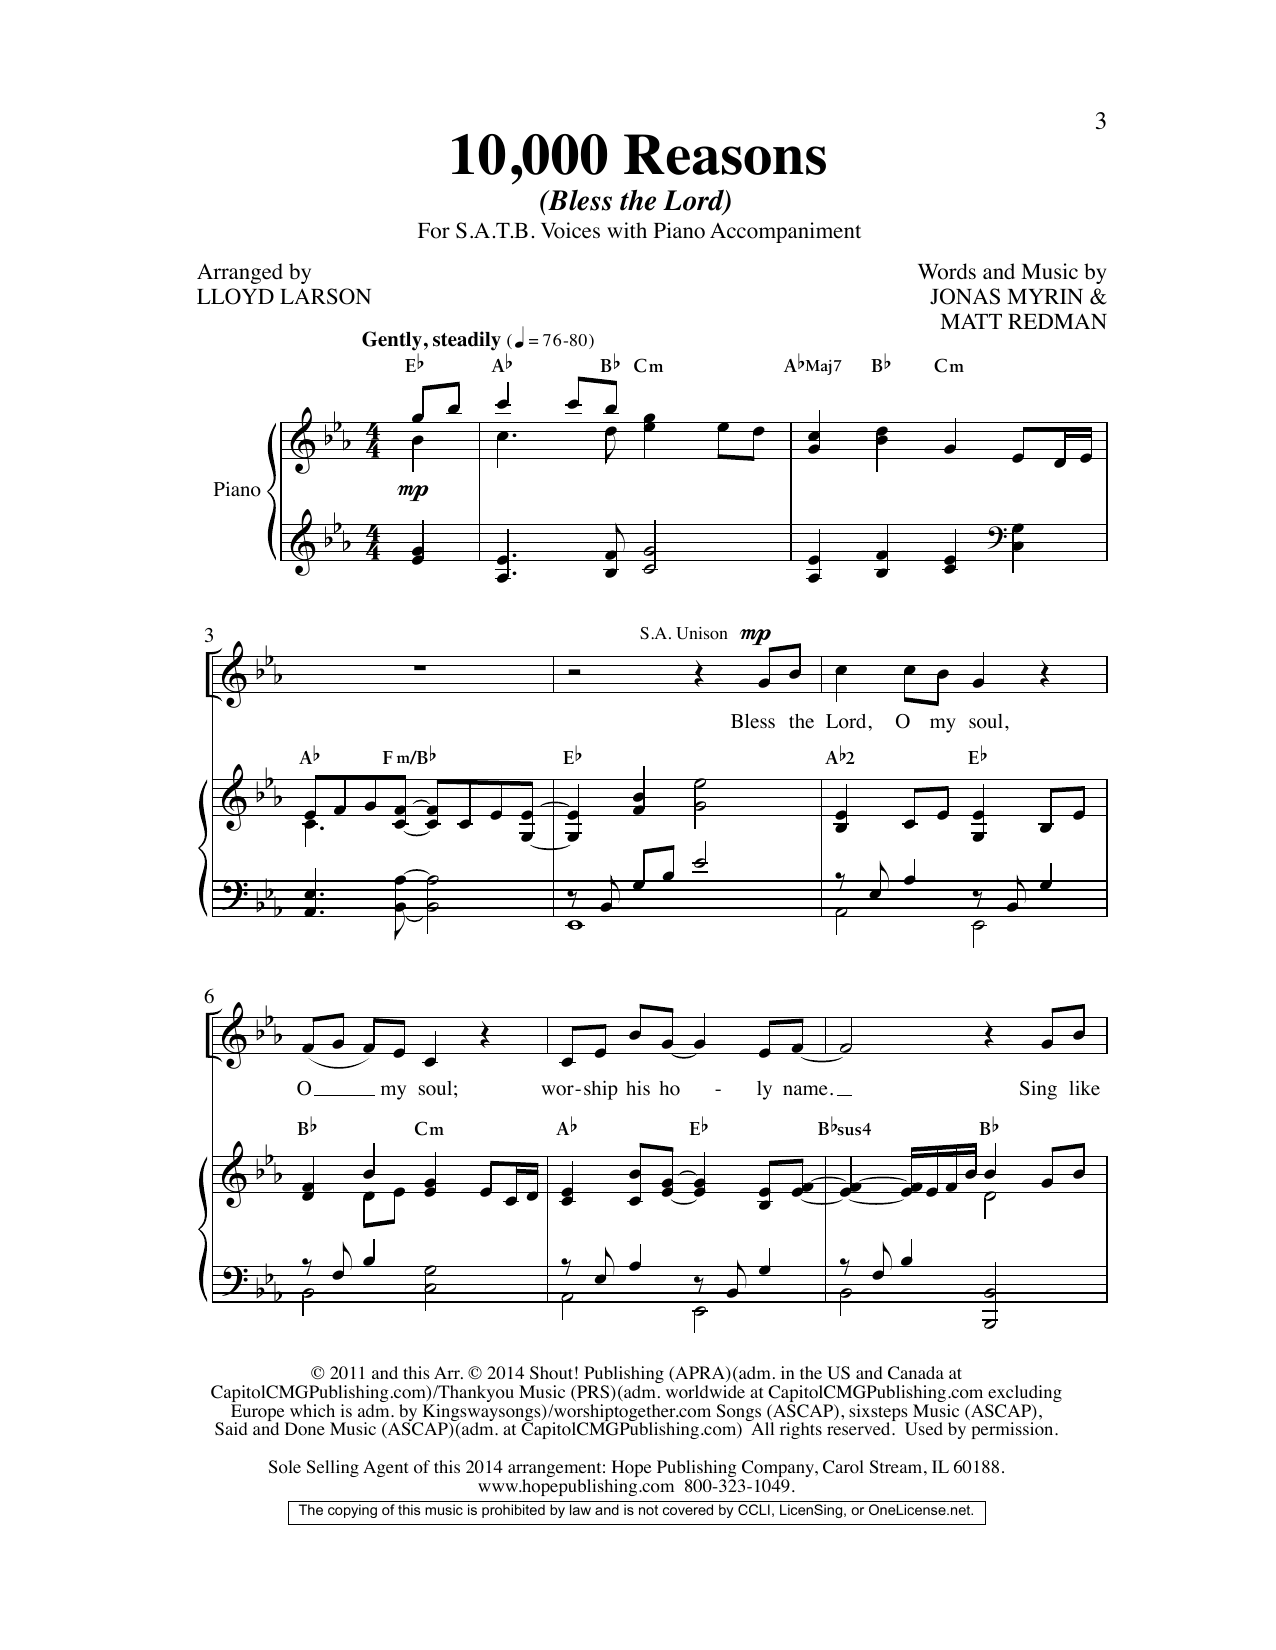 Matt Redman 10,000 Reasons (Bless the Lord) (arr. Lloyd Larson) Sheet Music Notes & Chords for Choir - Download or Print PDF